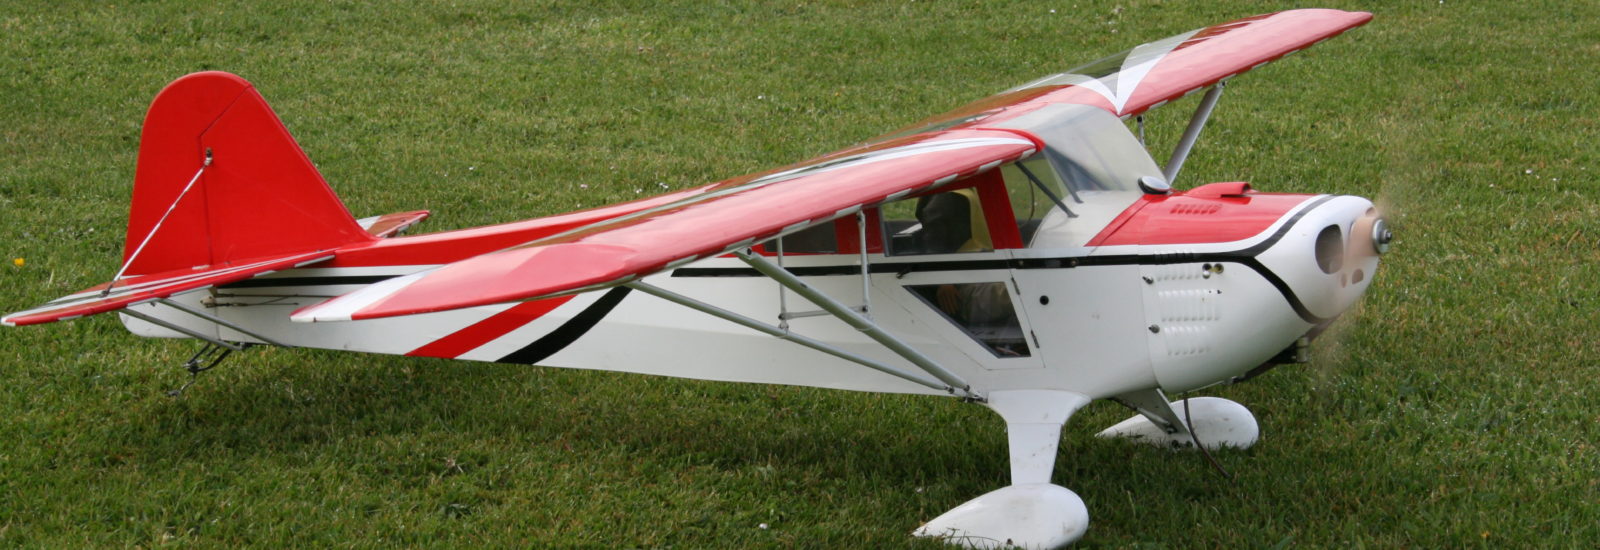 Midland Model Flying Club – *IMPORTANT* Read Airborne Geological Survey ...